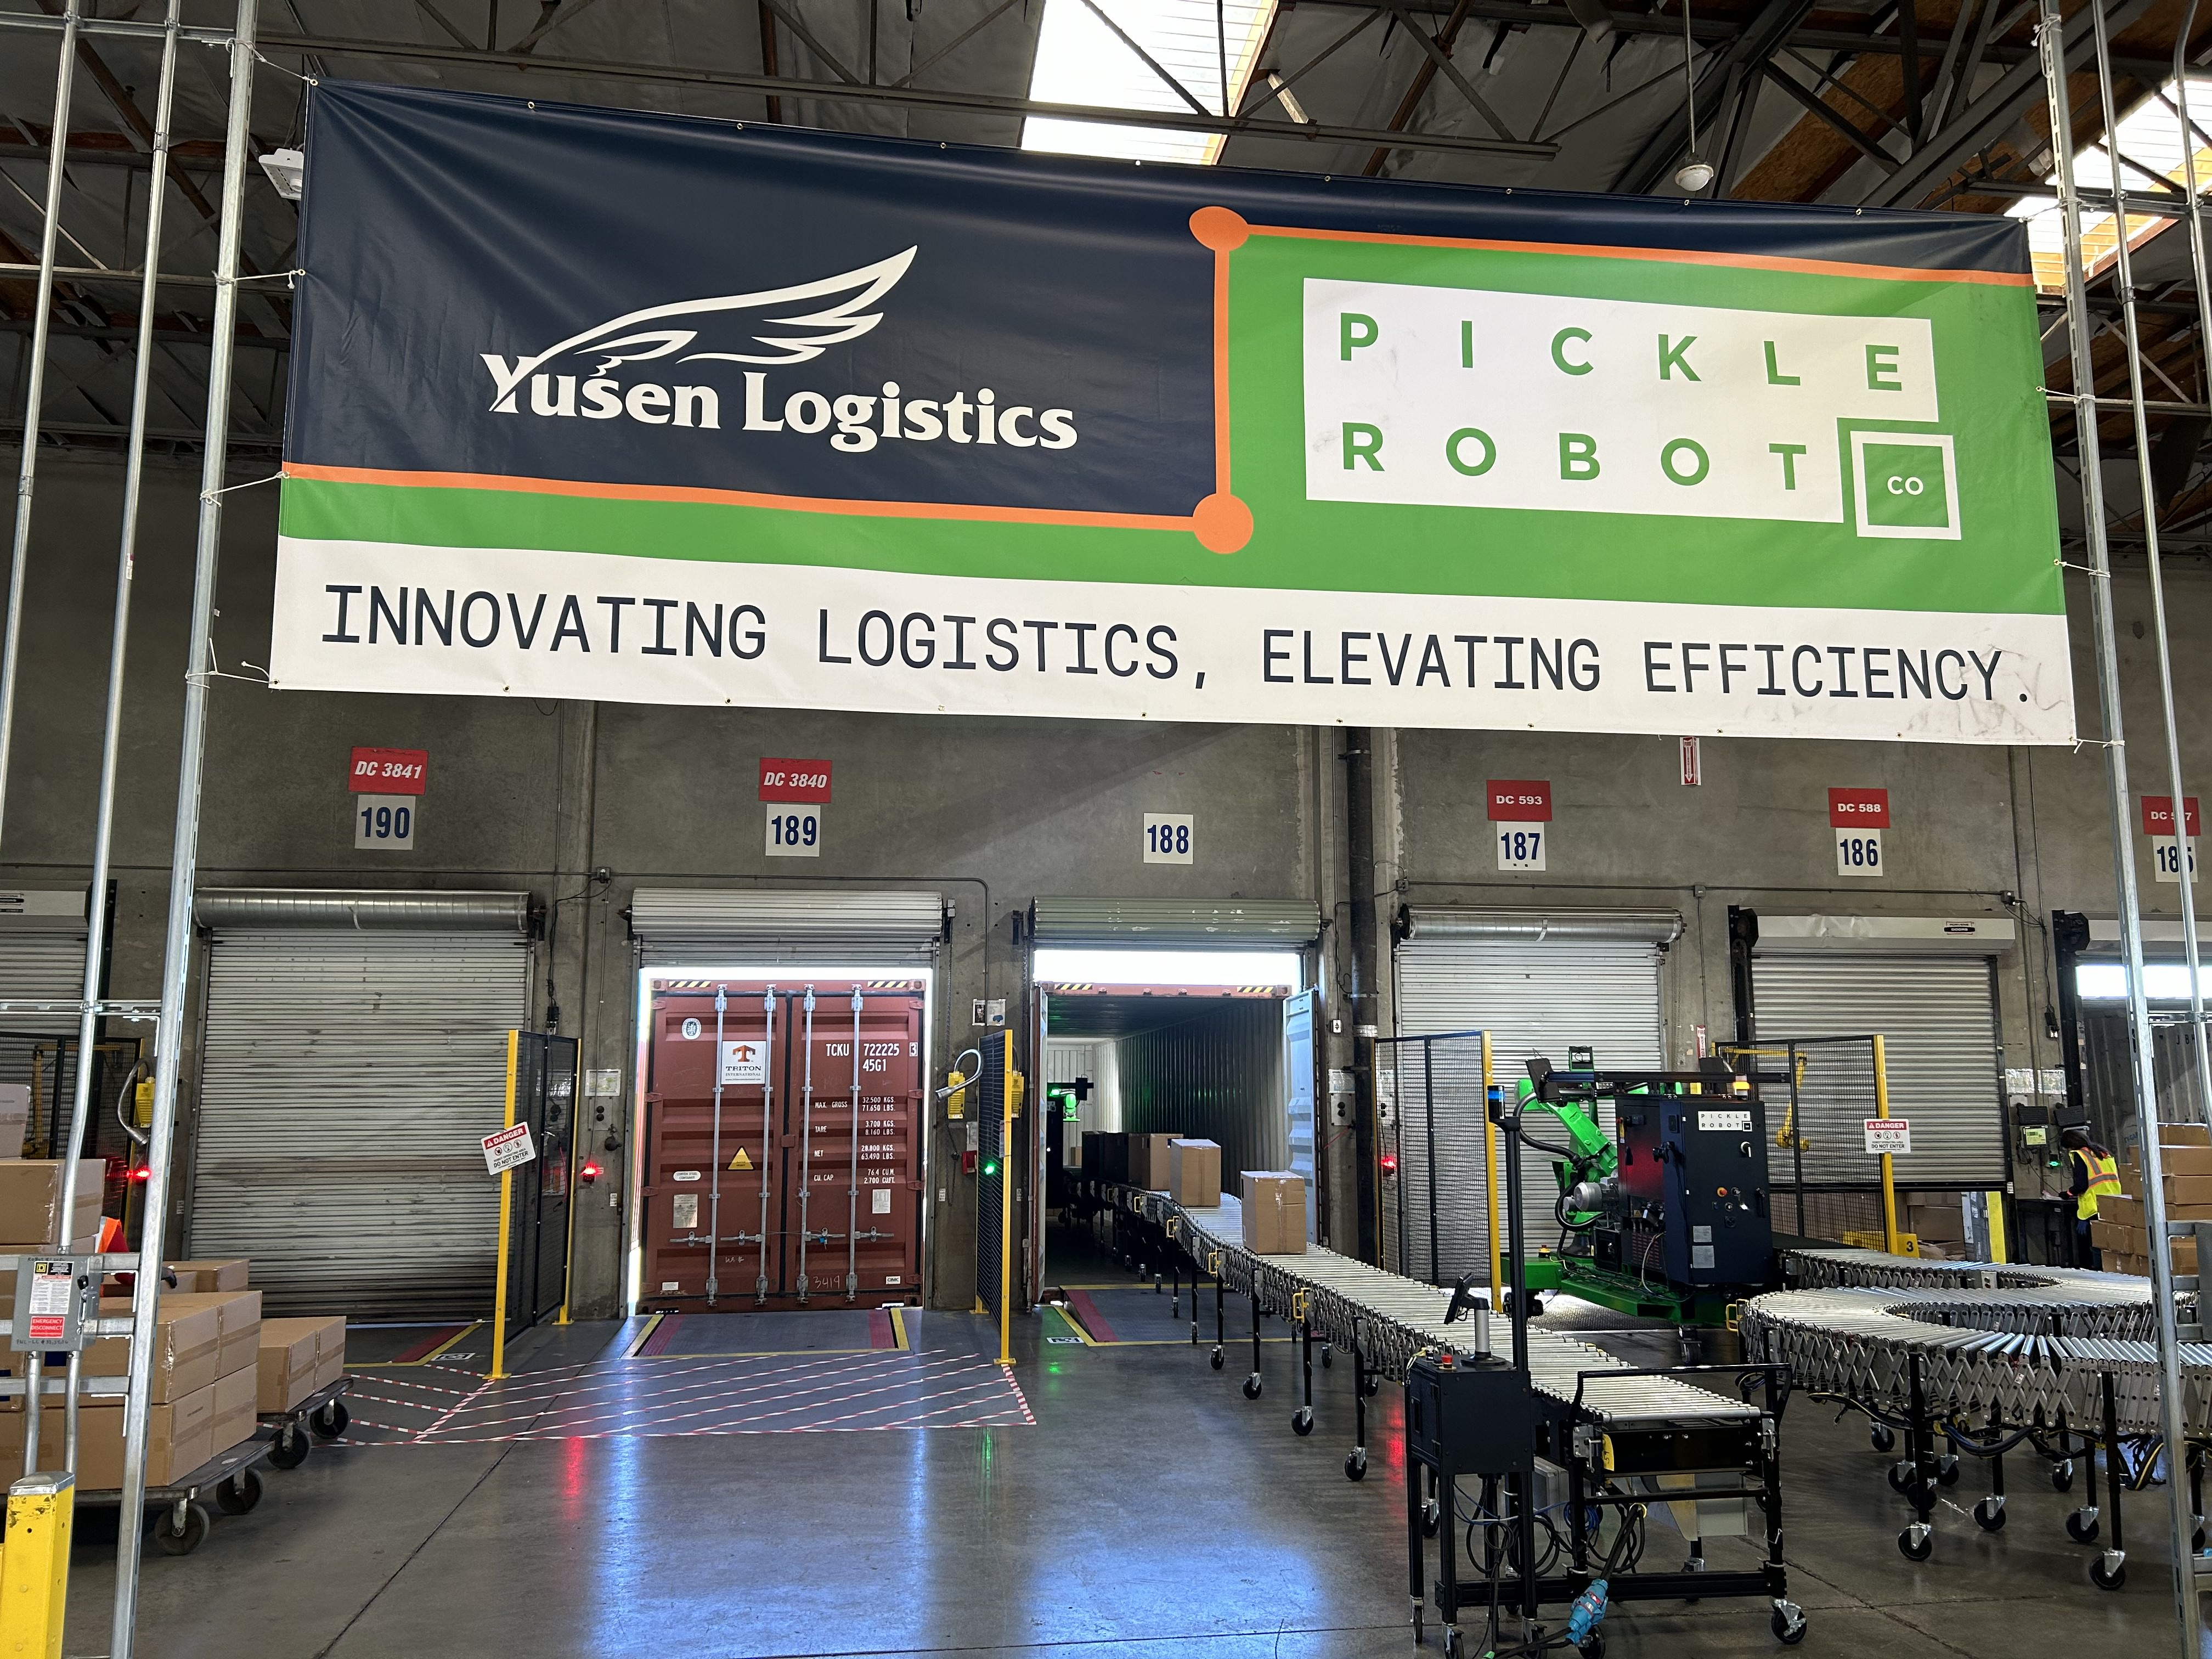 Yusen_Logistics_and_Pickle_Robot_Partnership